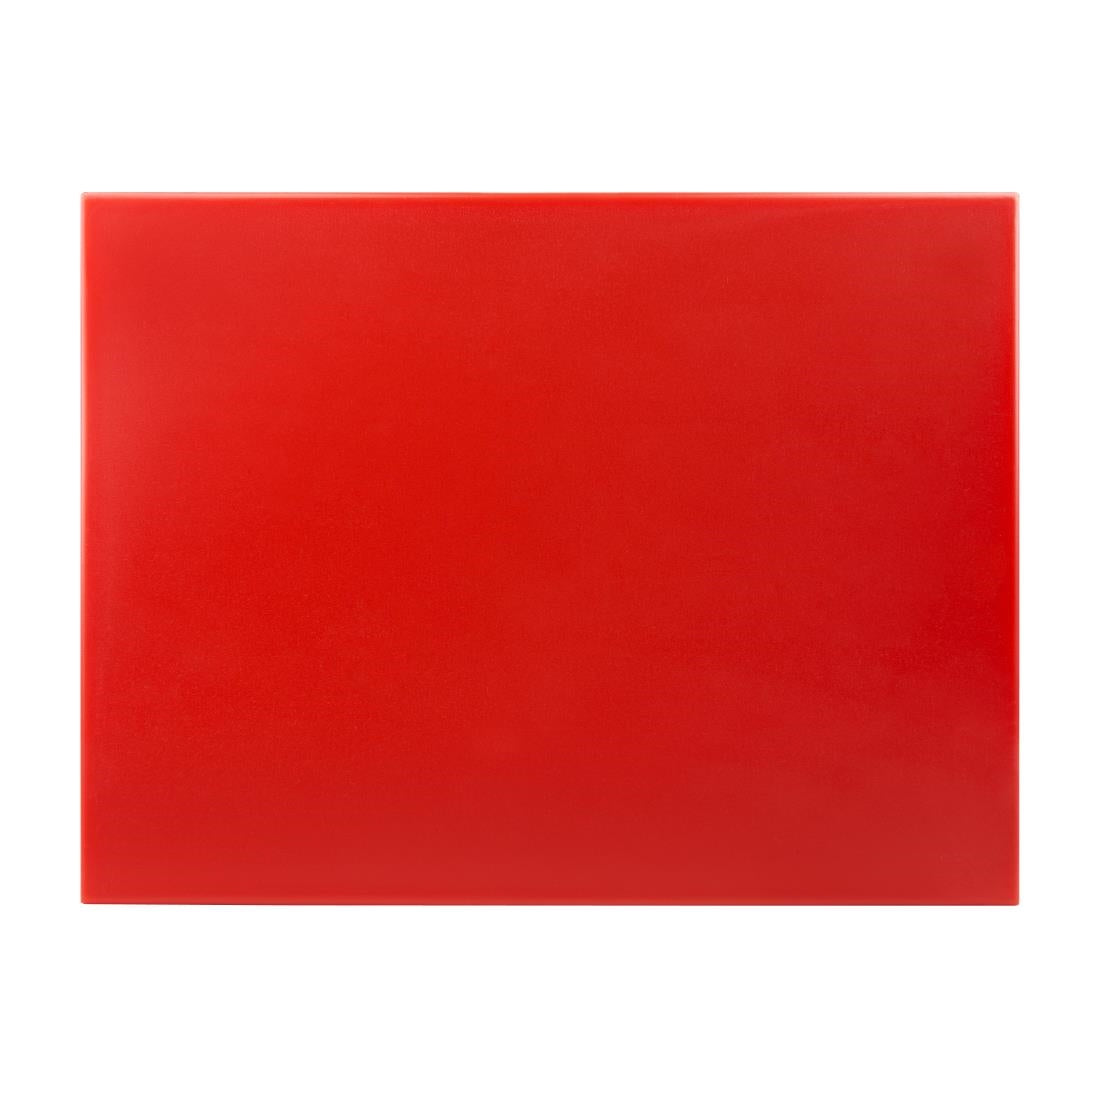 EDLP - Hygiplas High Density Chopping Board Red 600x450x12mm 23 1/2x17 3/4x1/2"